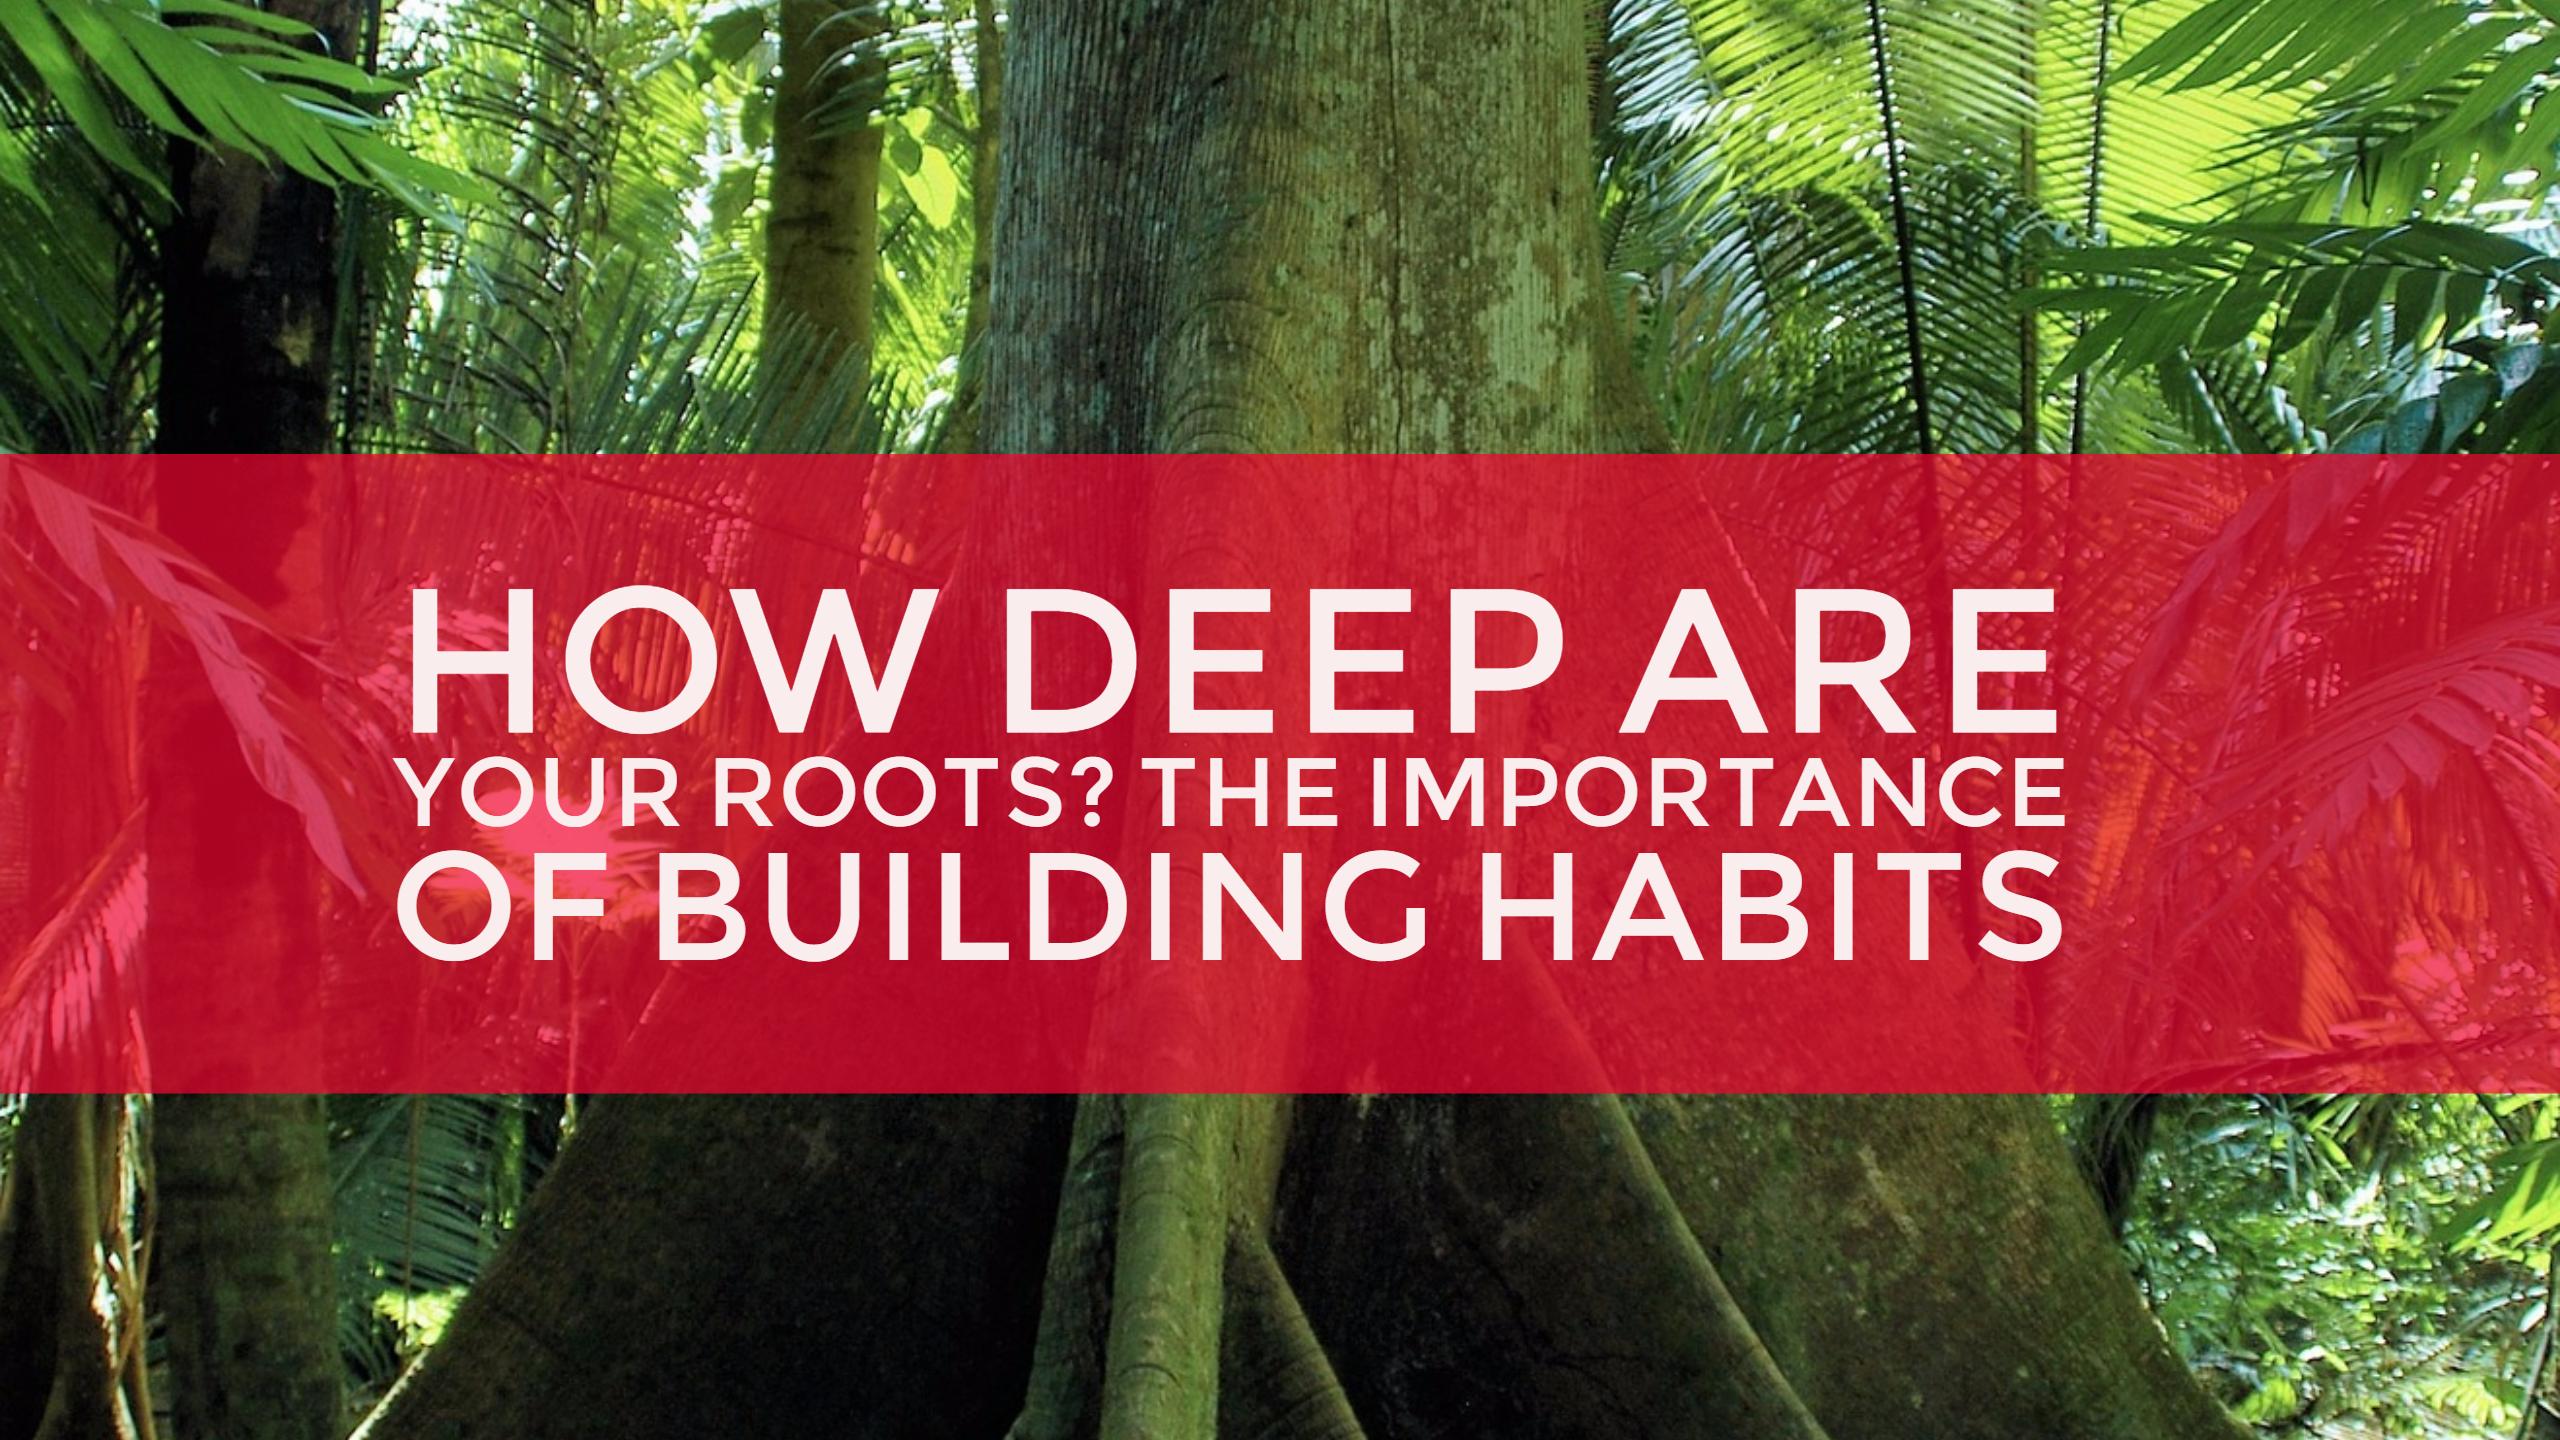 trees-building-habits